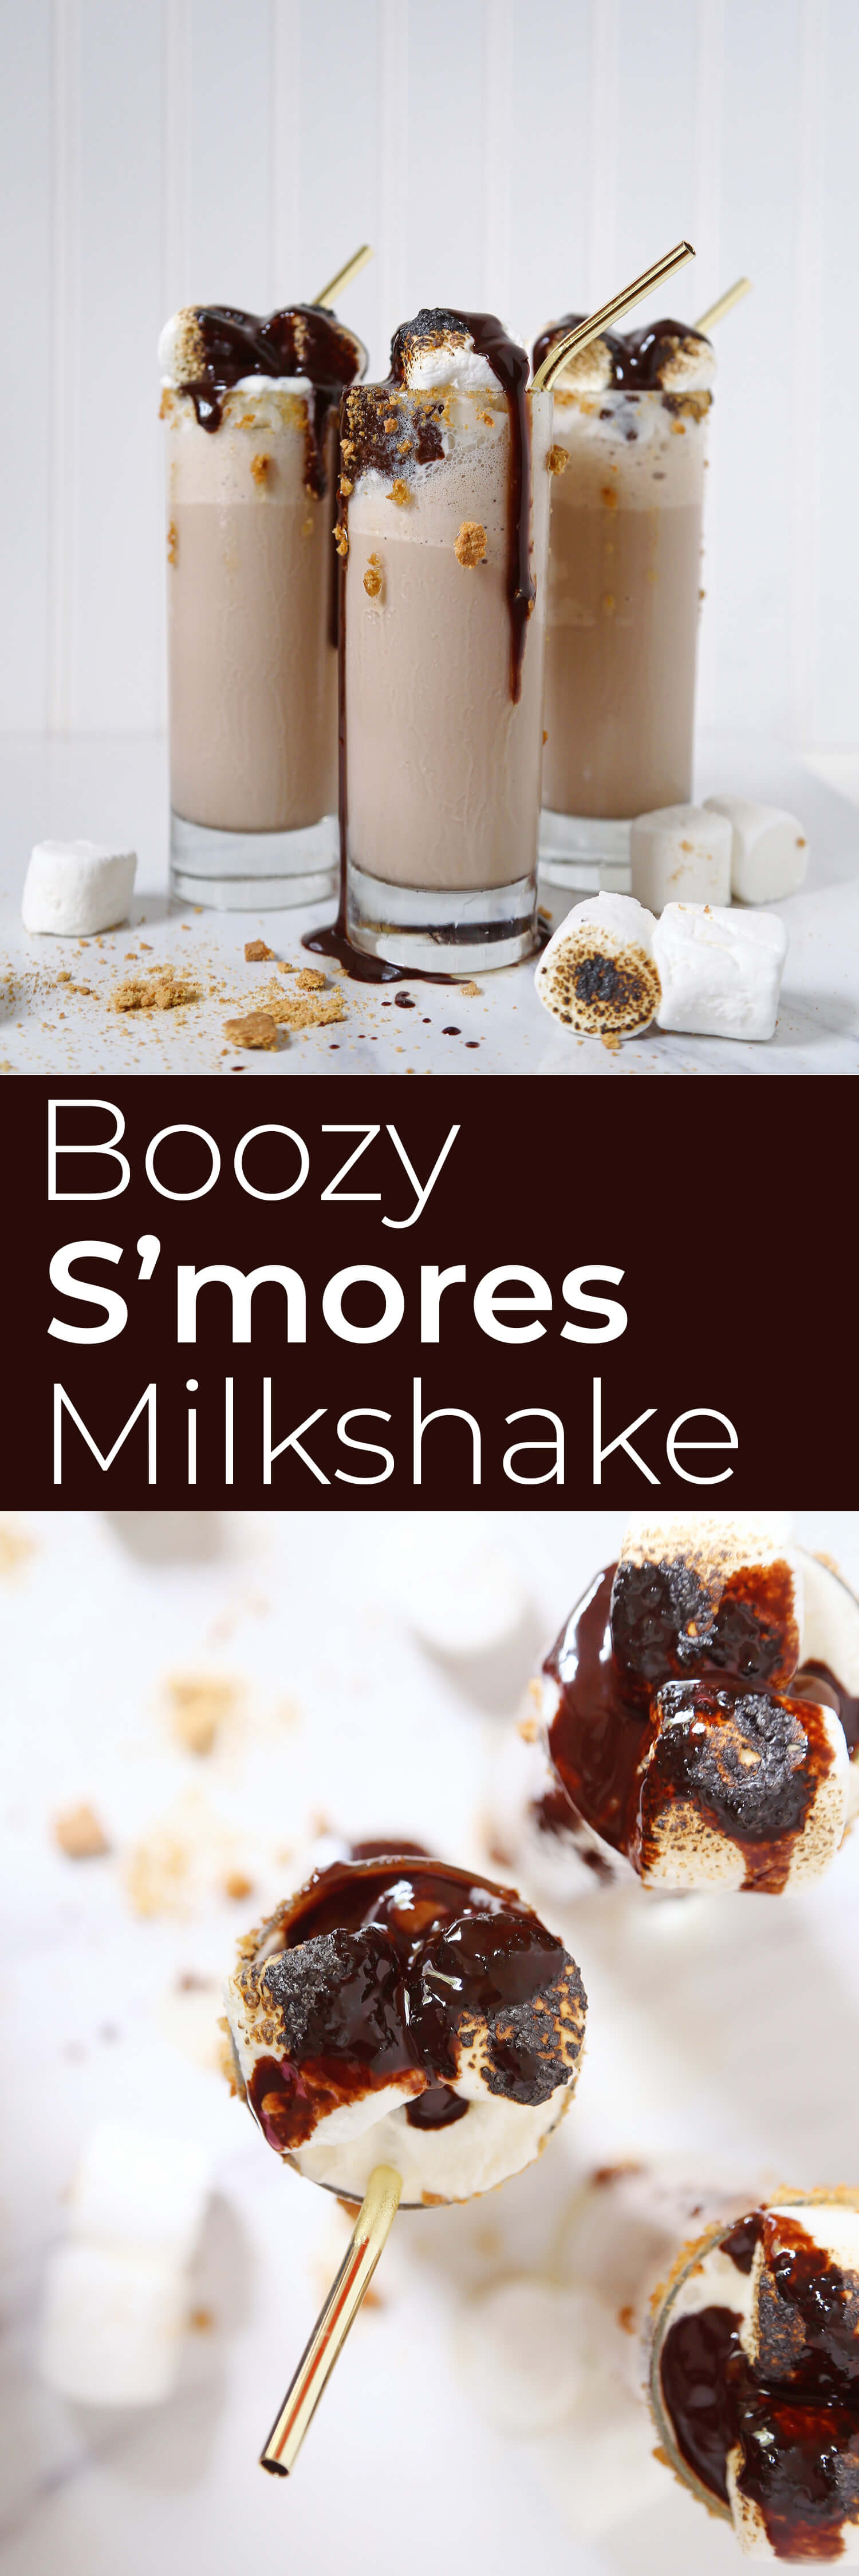 Boozy S'mores Milkshake